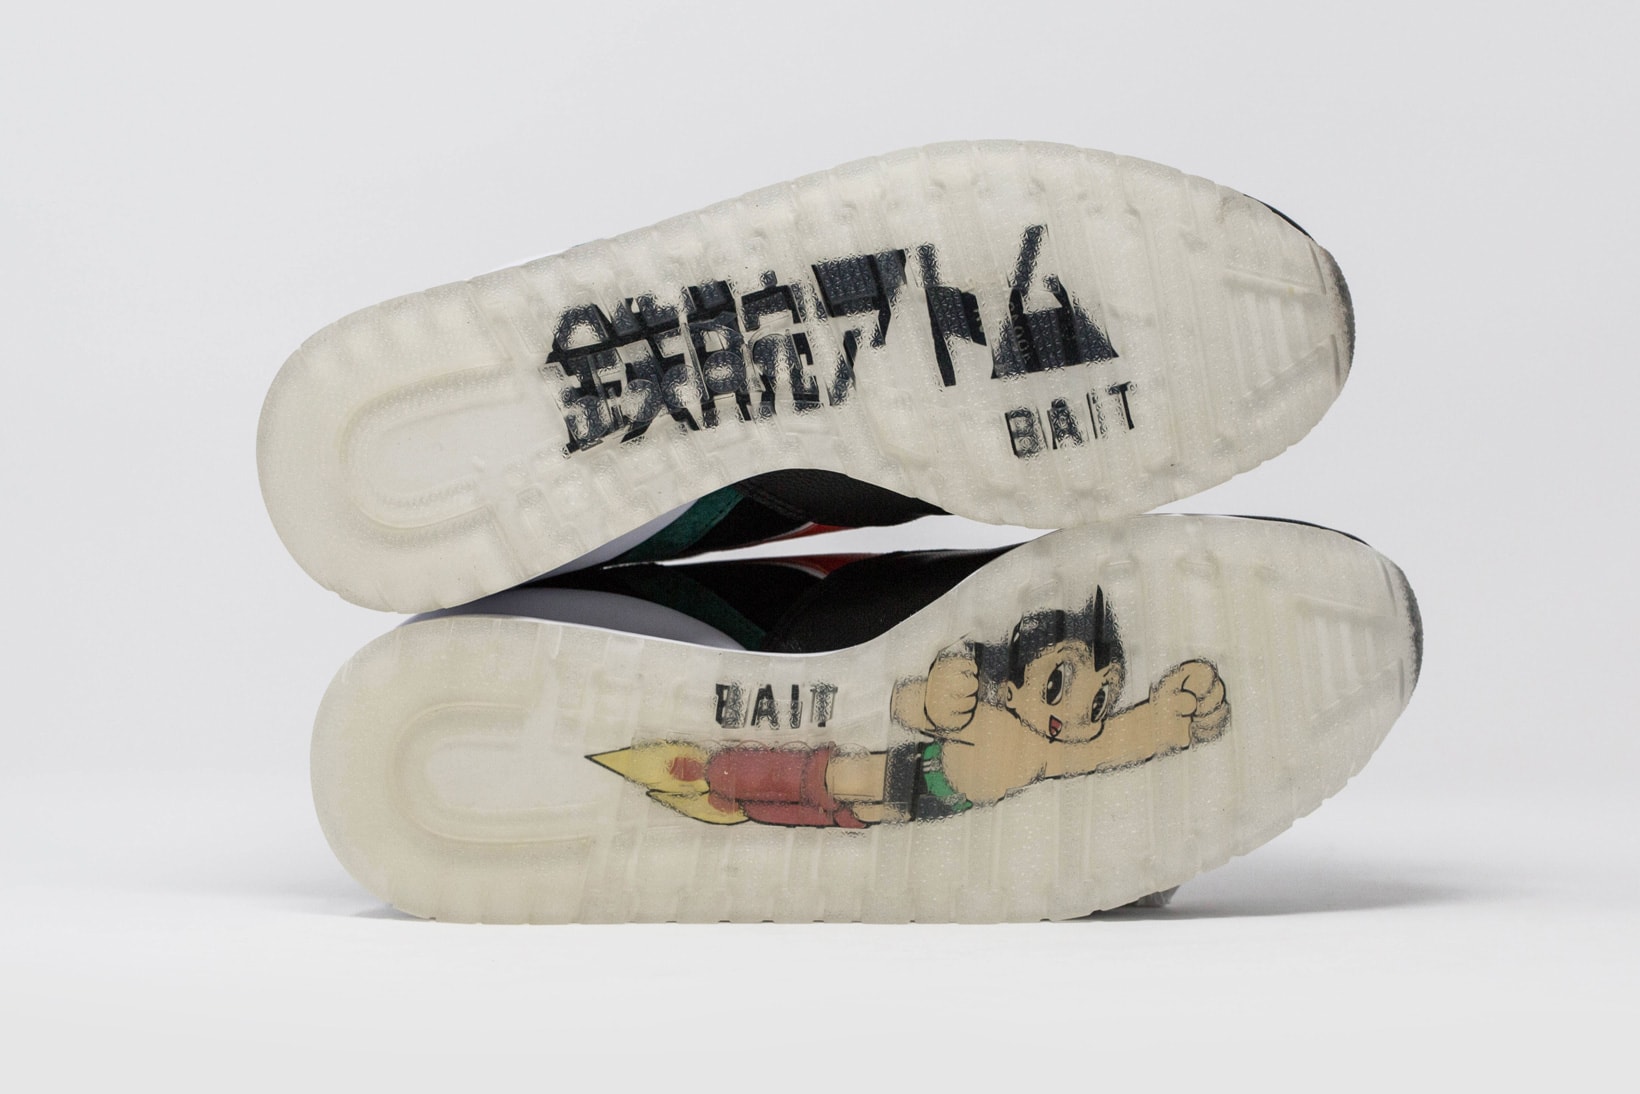 Astro Boy Diadora Intrepid B.Elite BAIT Collection Fall Winter 2017 Footwear Shoes